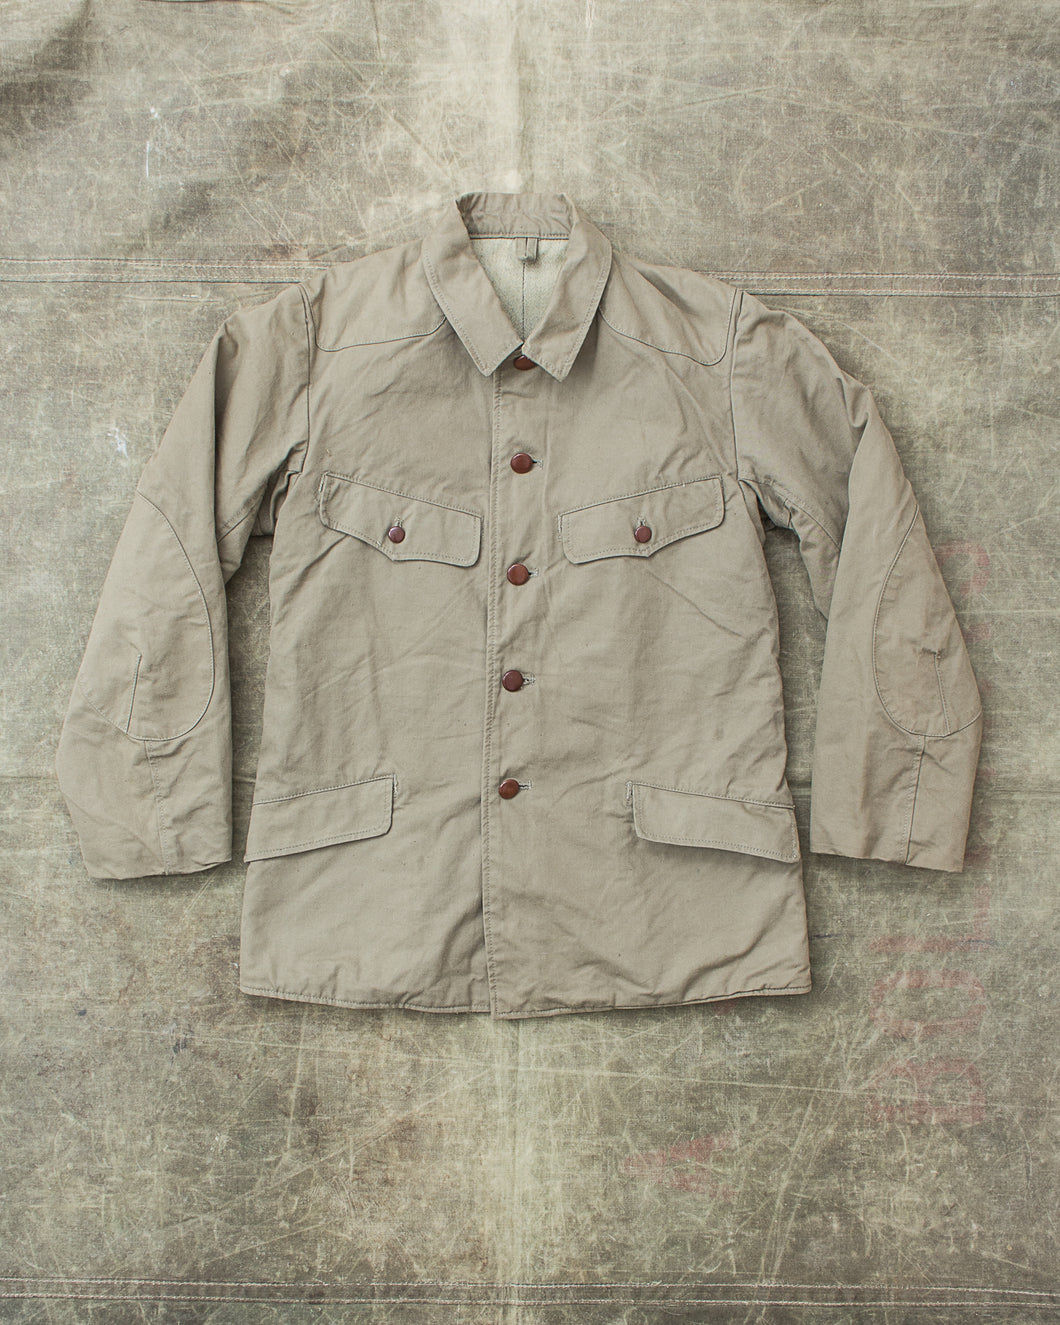 Vintage WWII Japanese Army Uniform Jacket